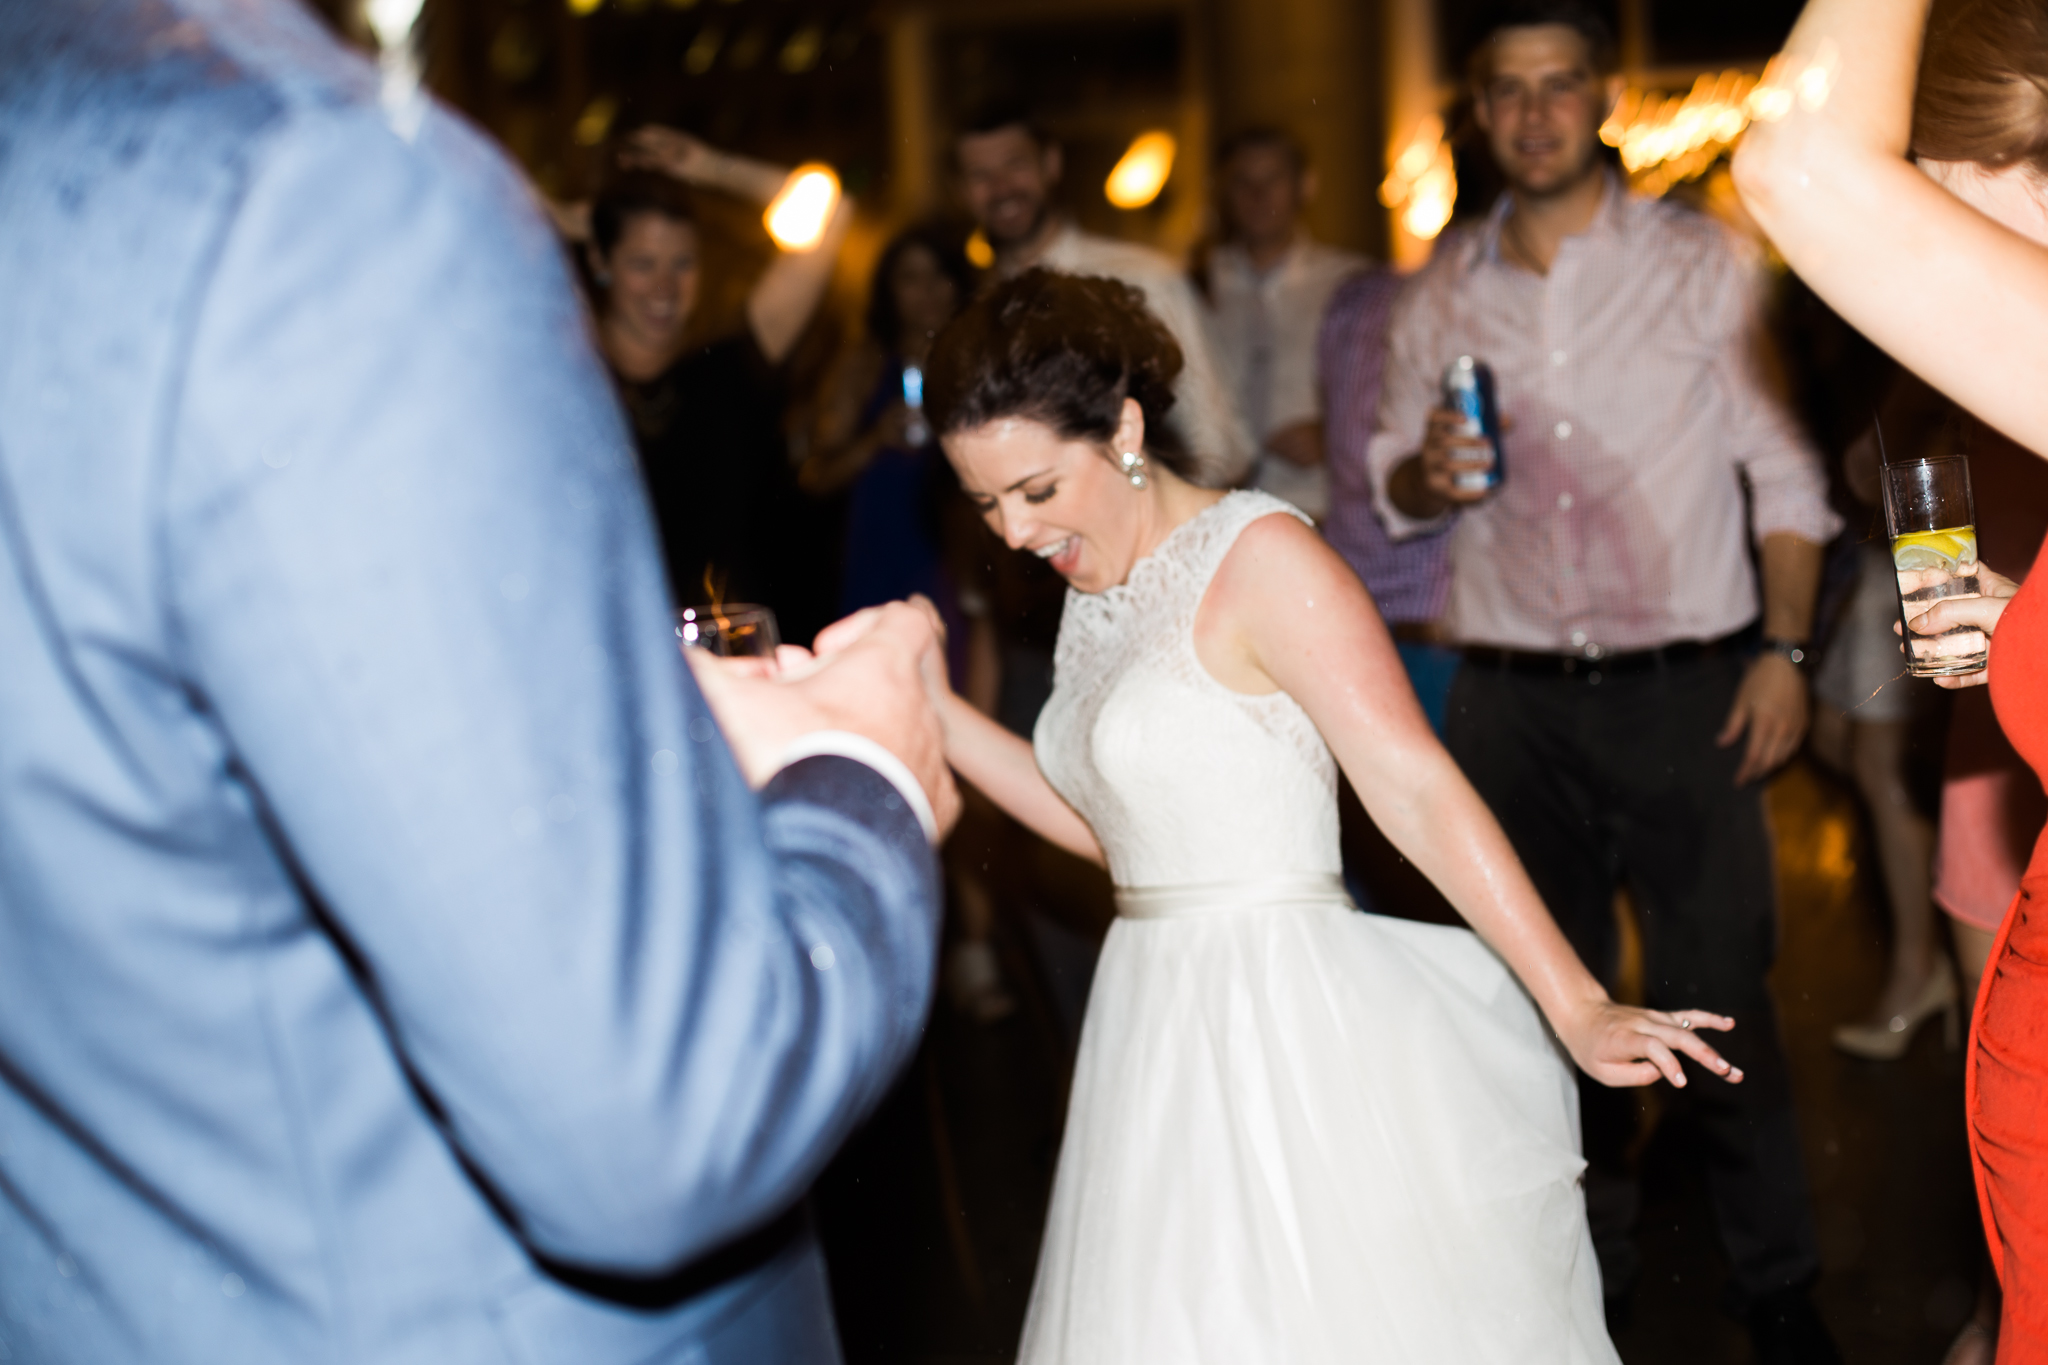 Coohills Wedding Photographer - dancing reception